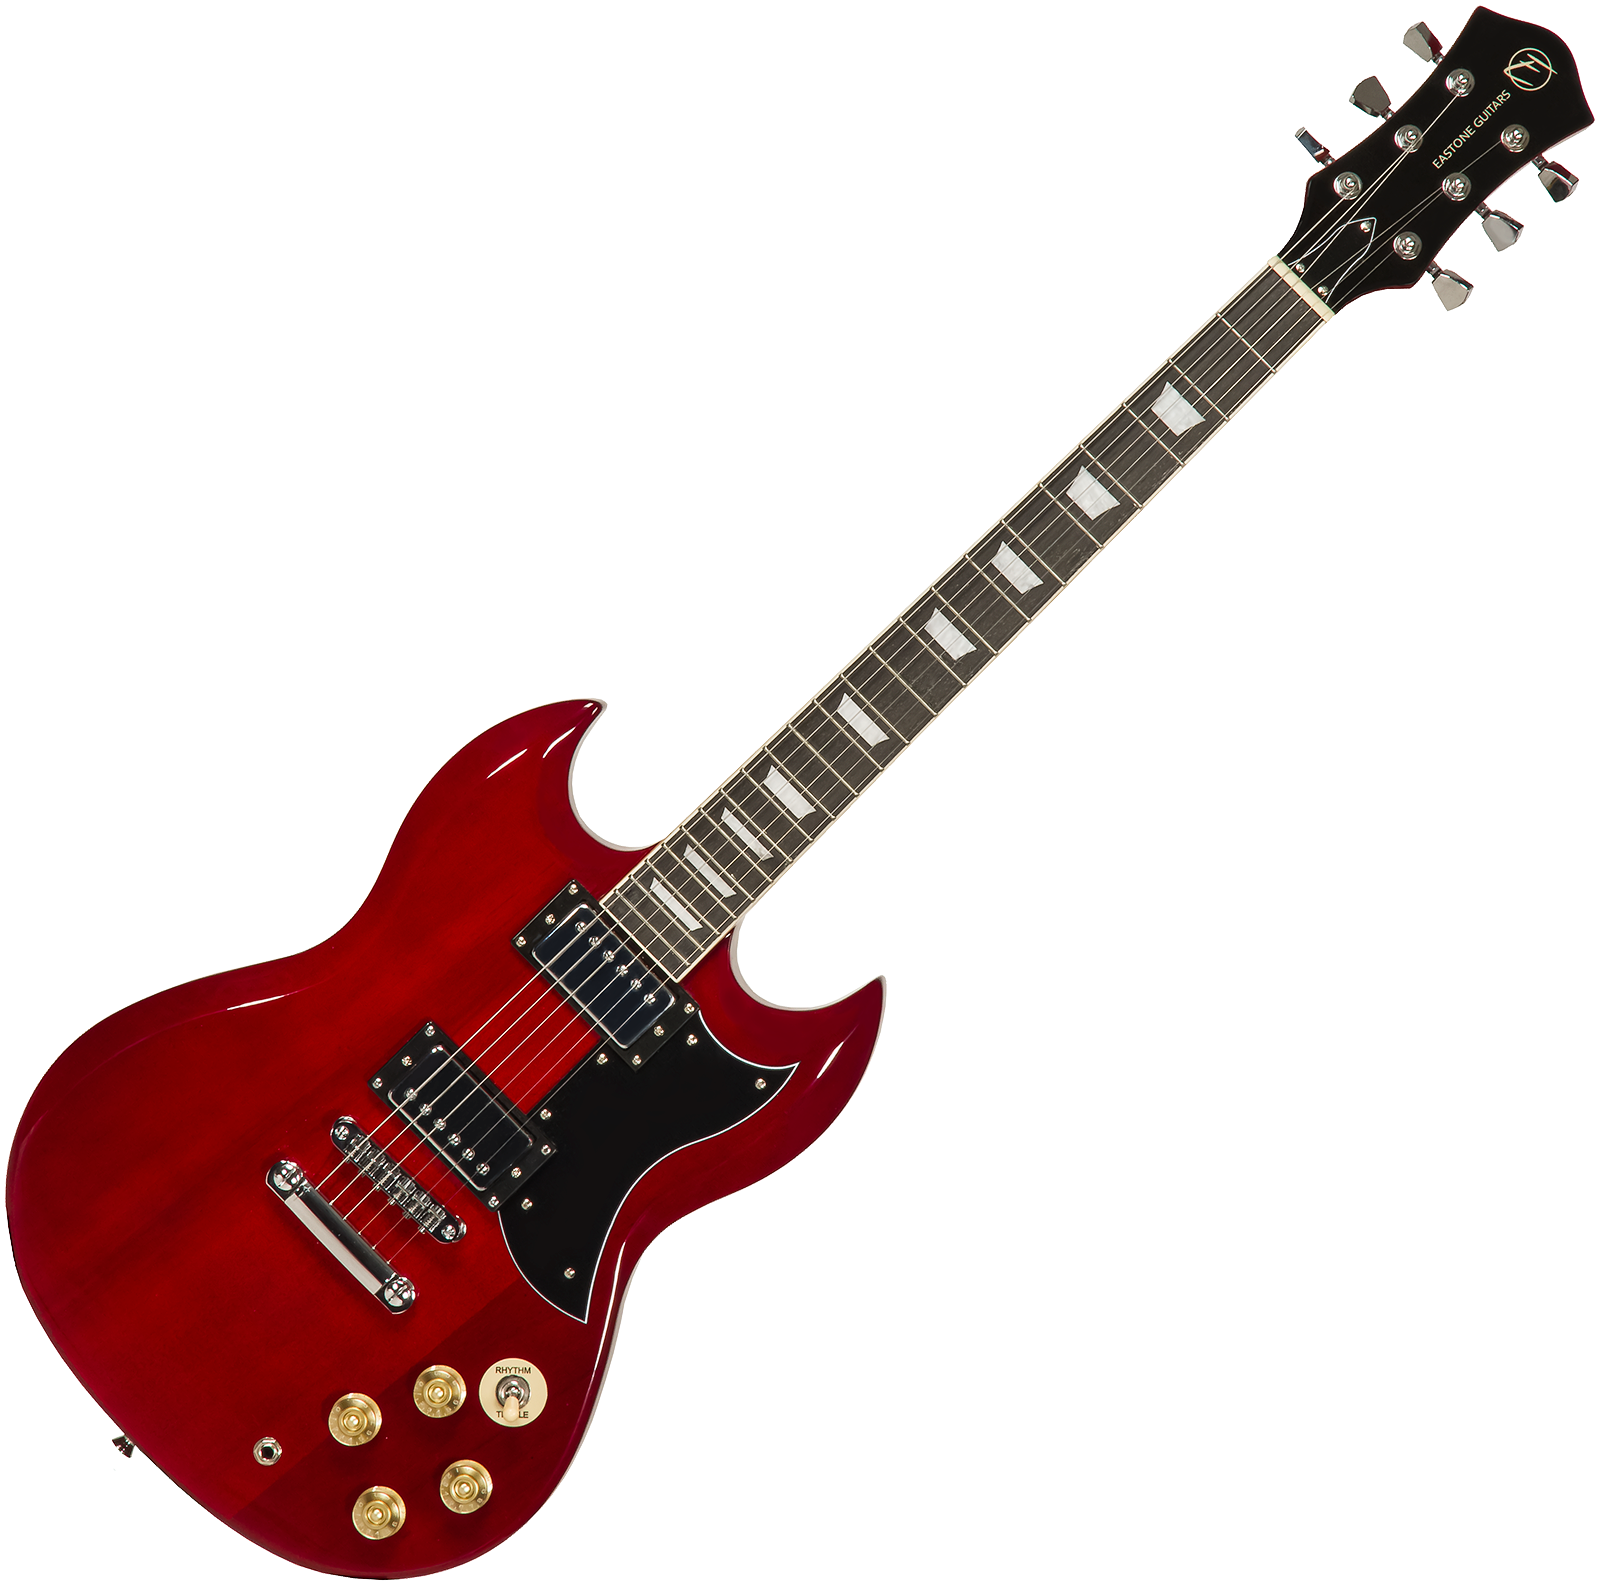 Eastone Sdc70 +marshall Mg10g Gold +cable +housse +courroie +mediators - Red - Elektrische gitaar set - Variation 1